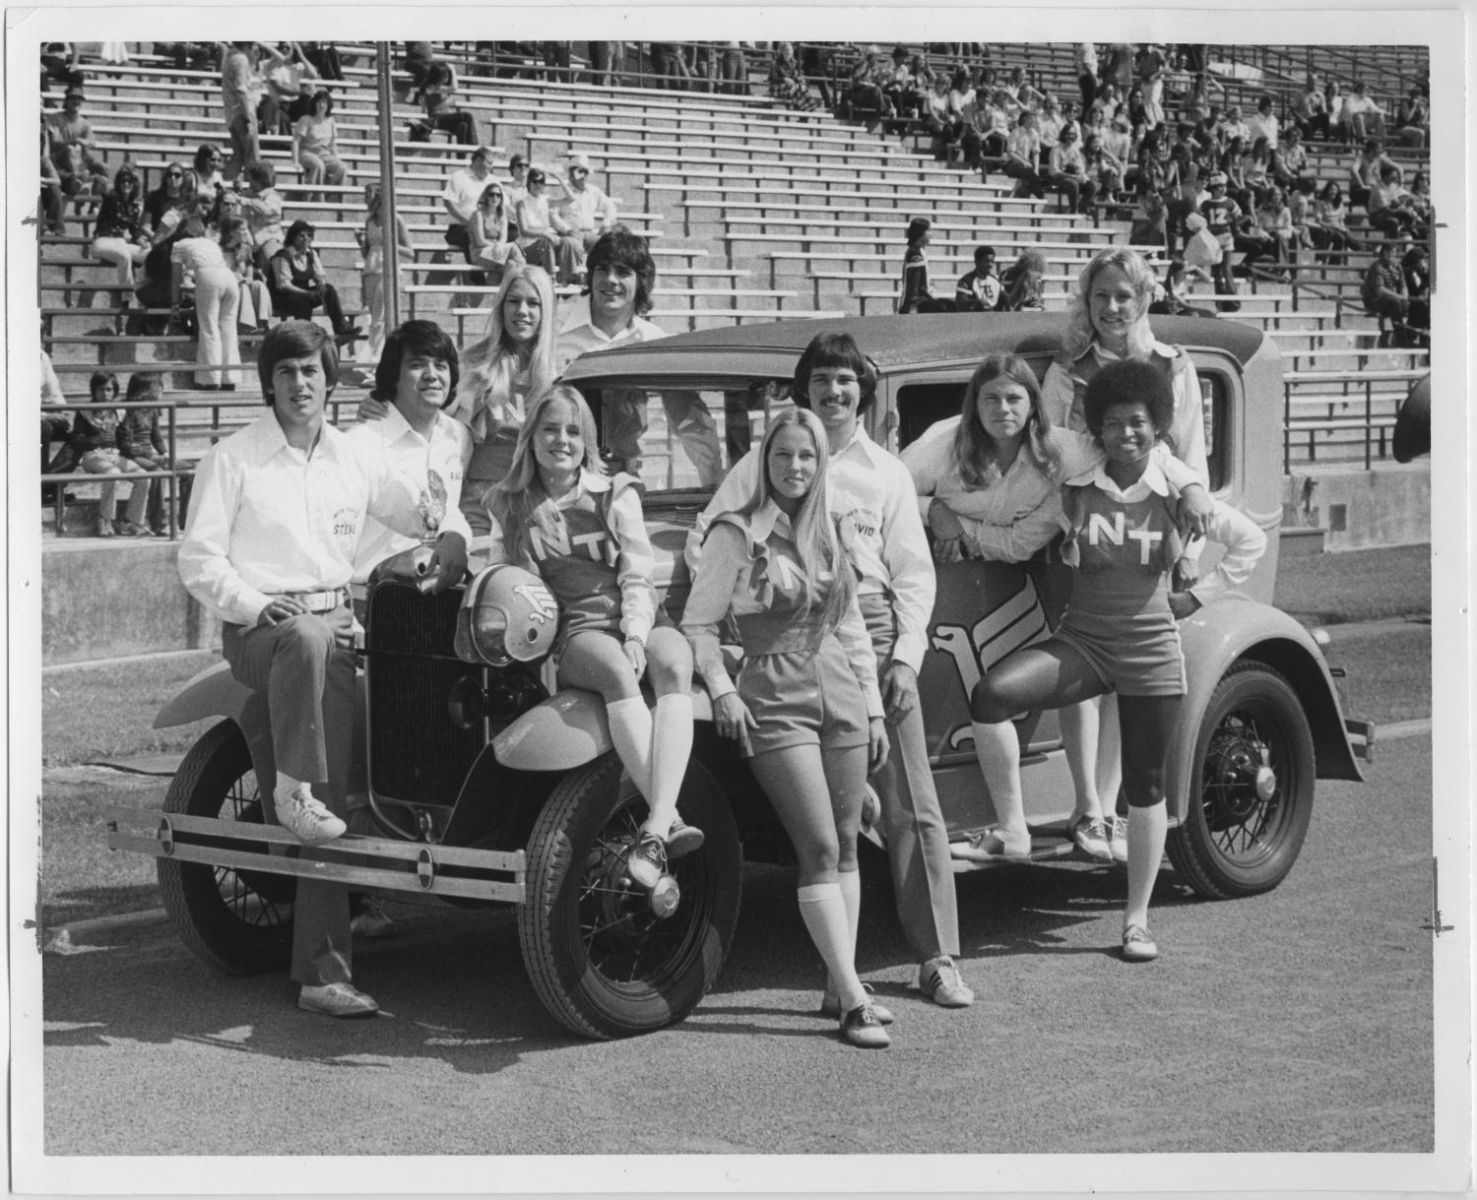 North Texas State University Cheerleader, 1974